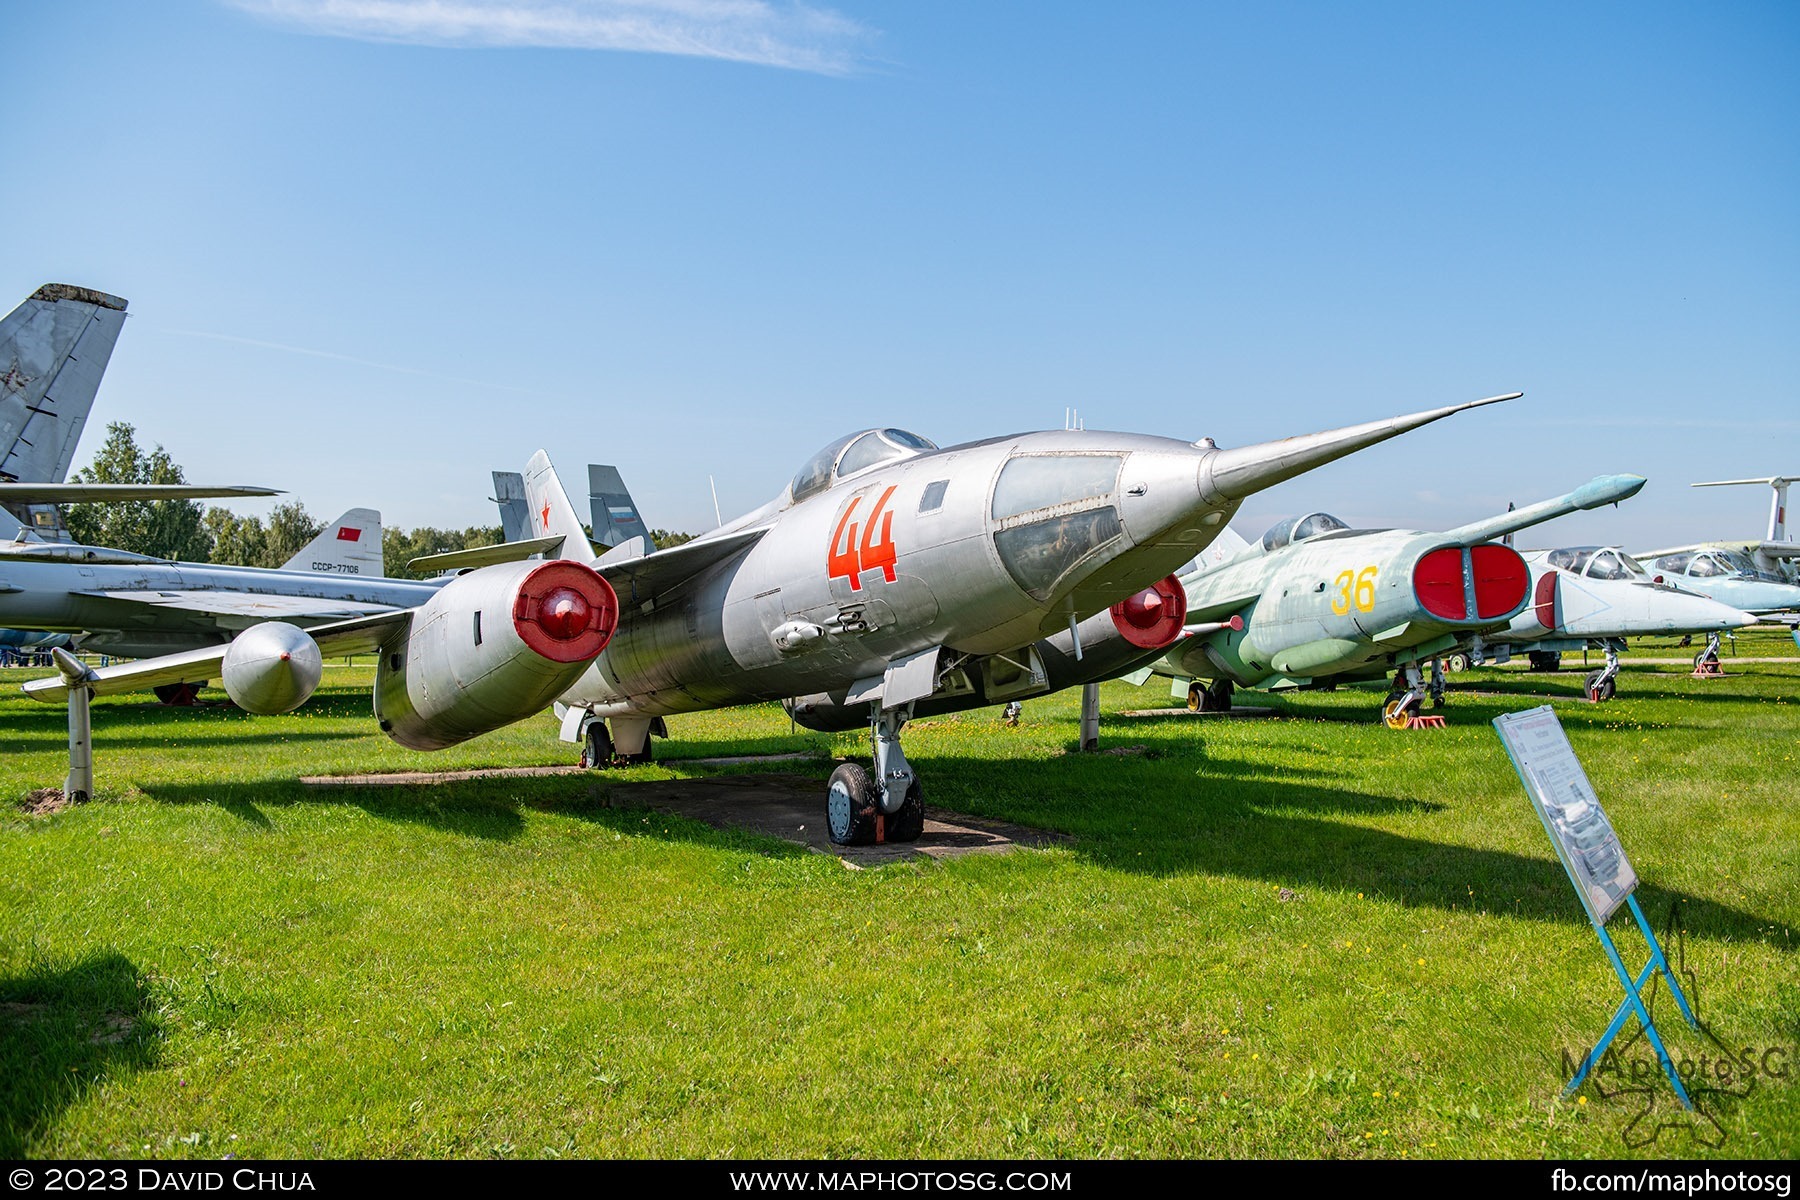 Yakolev Yak-28 bomber